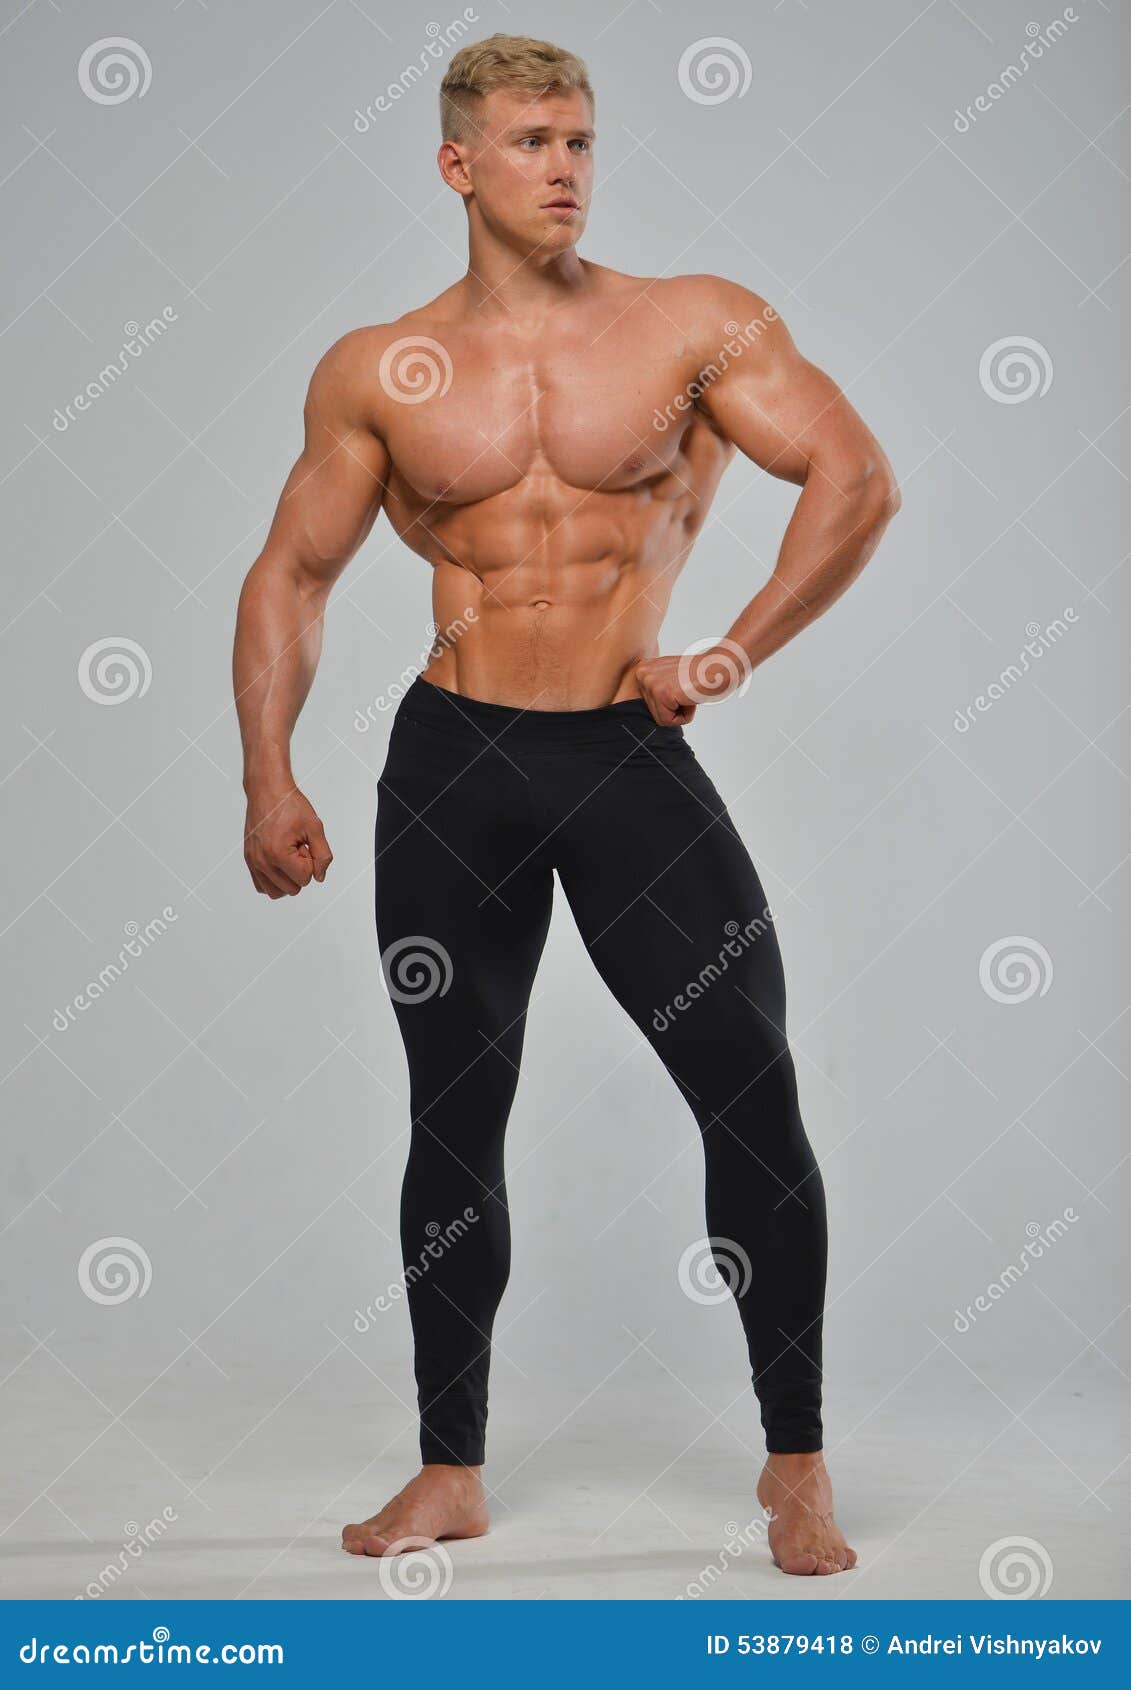 Catharine Zeta-jones Topless Fitness Male Model Muscle